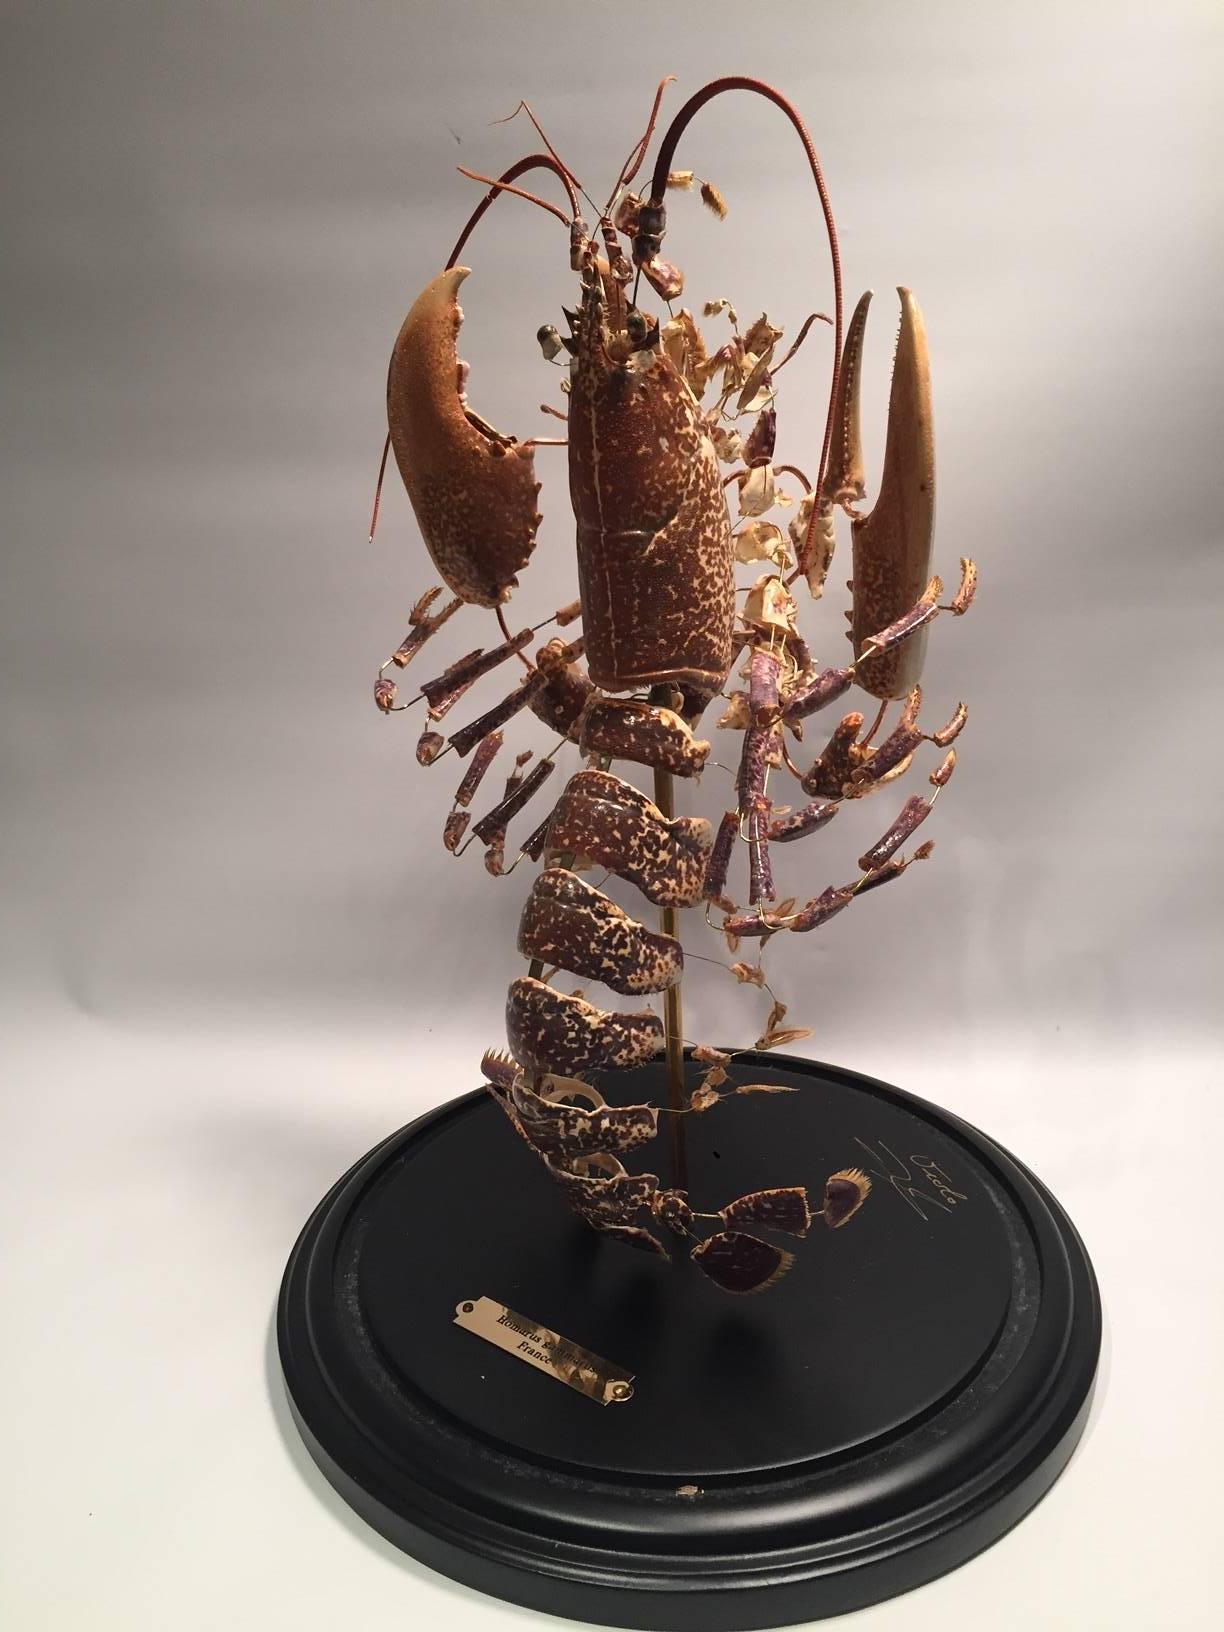 Deconstructed Clawed Lobster 'Homarus Gammarus' 2